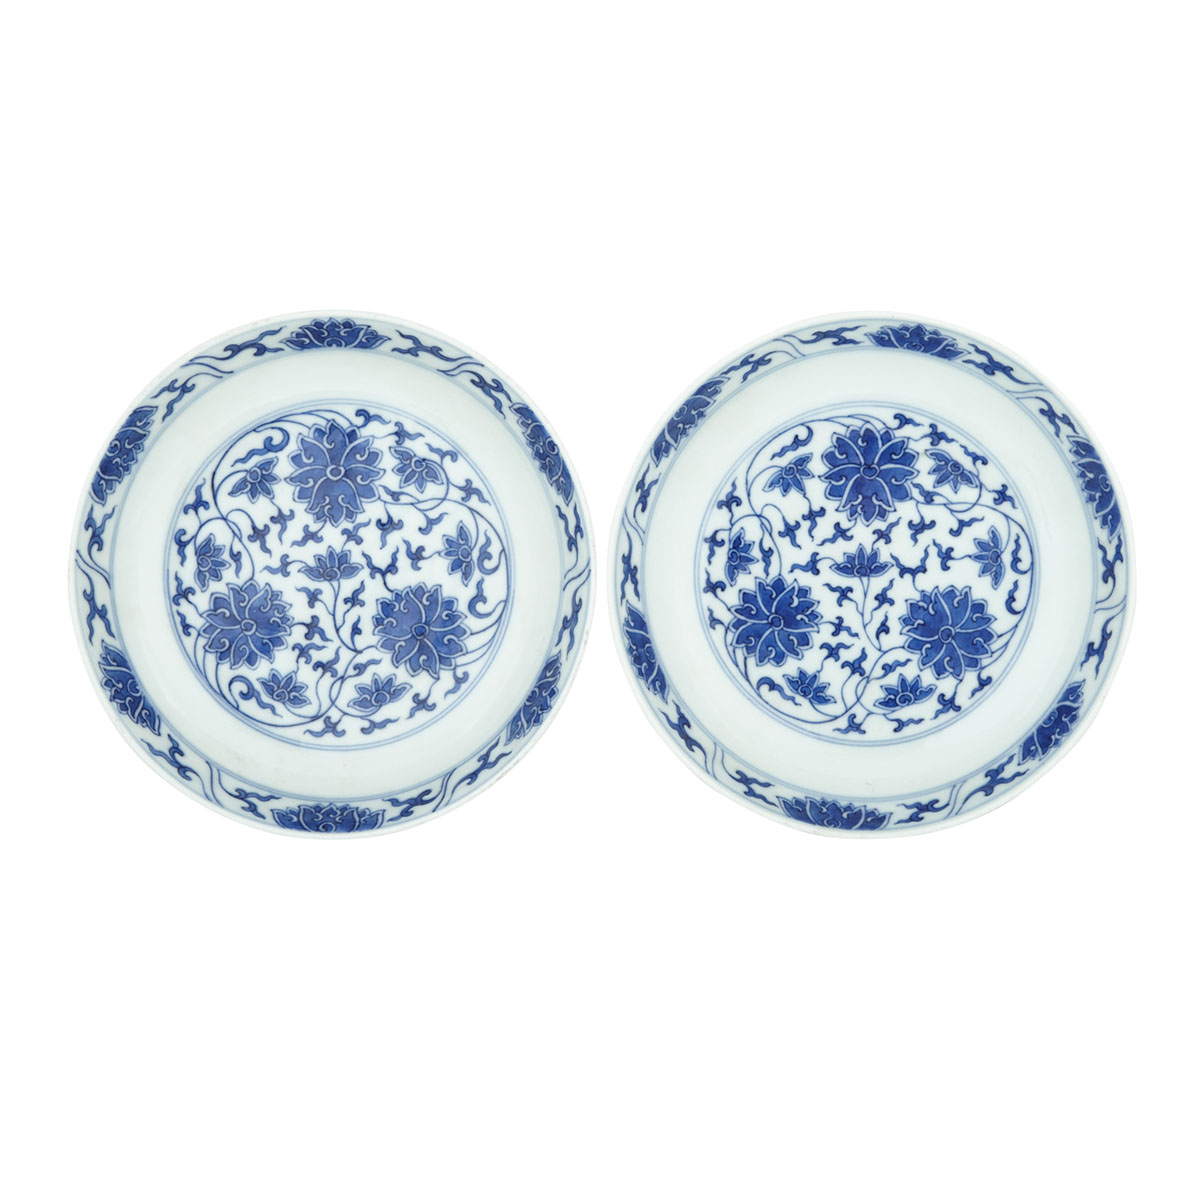 Pair of Blue and White Lotus Dishes, Tongzhi Mark